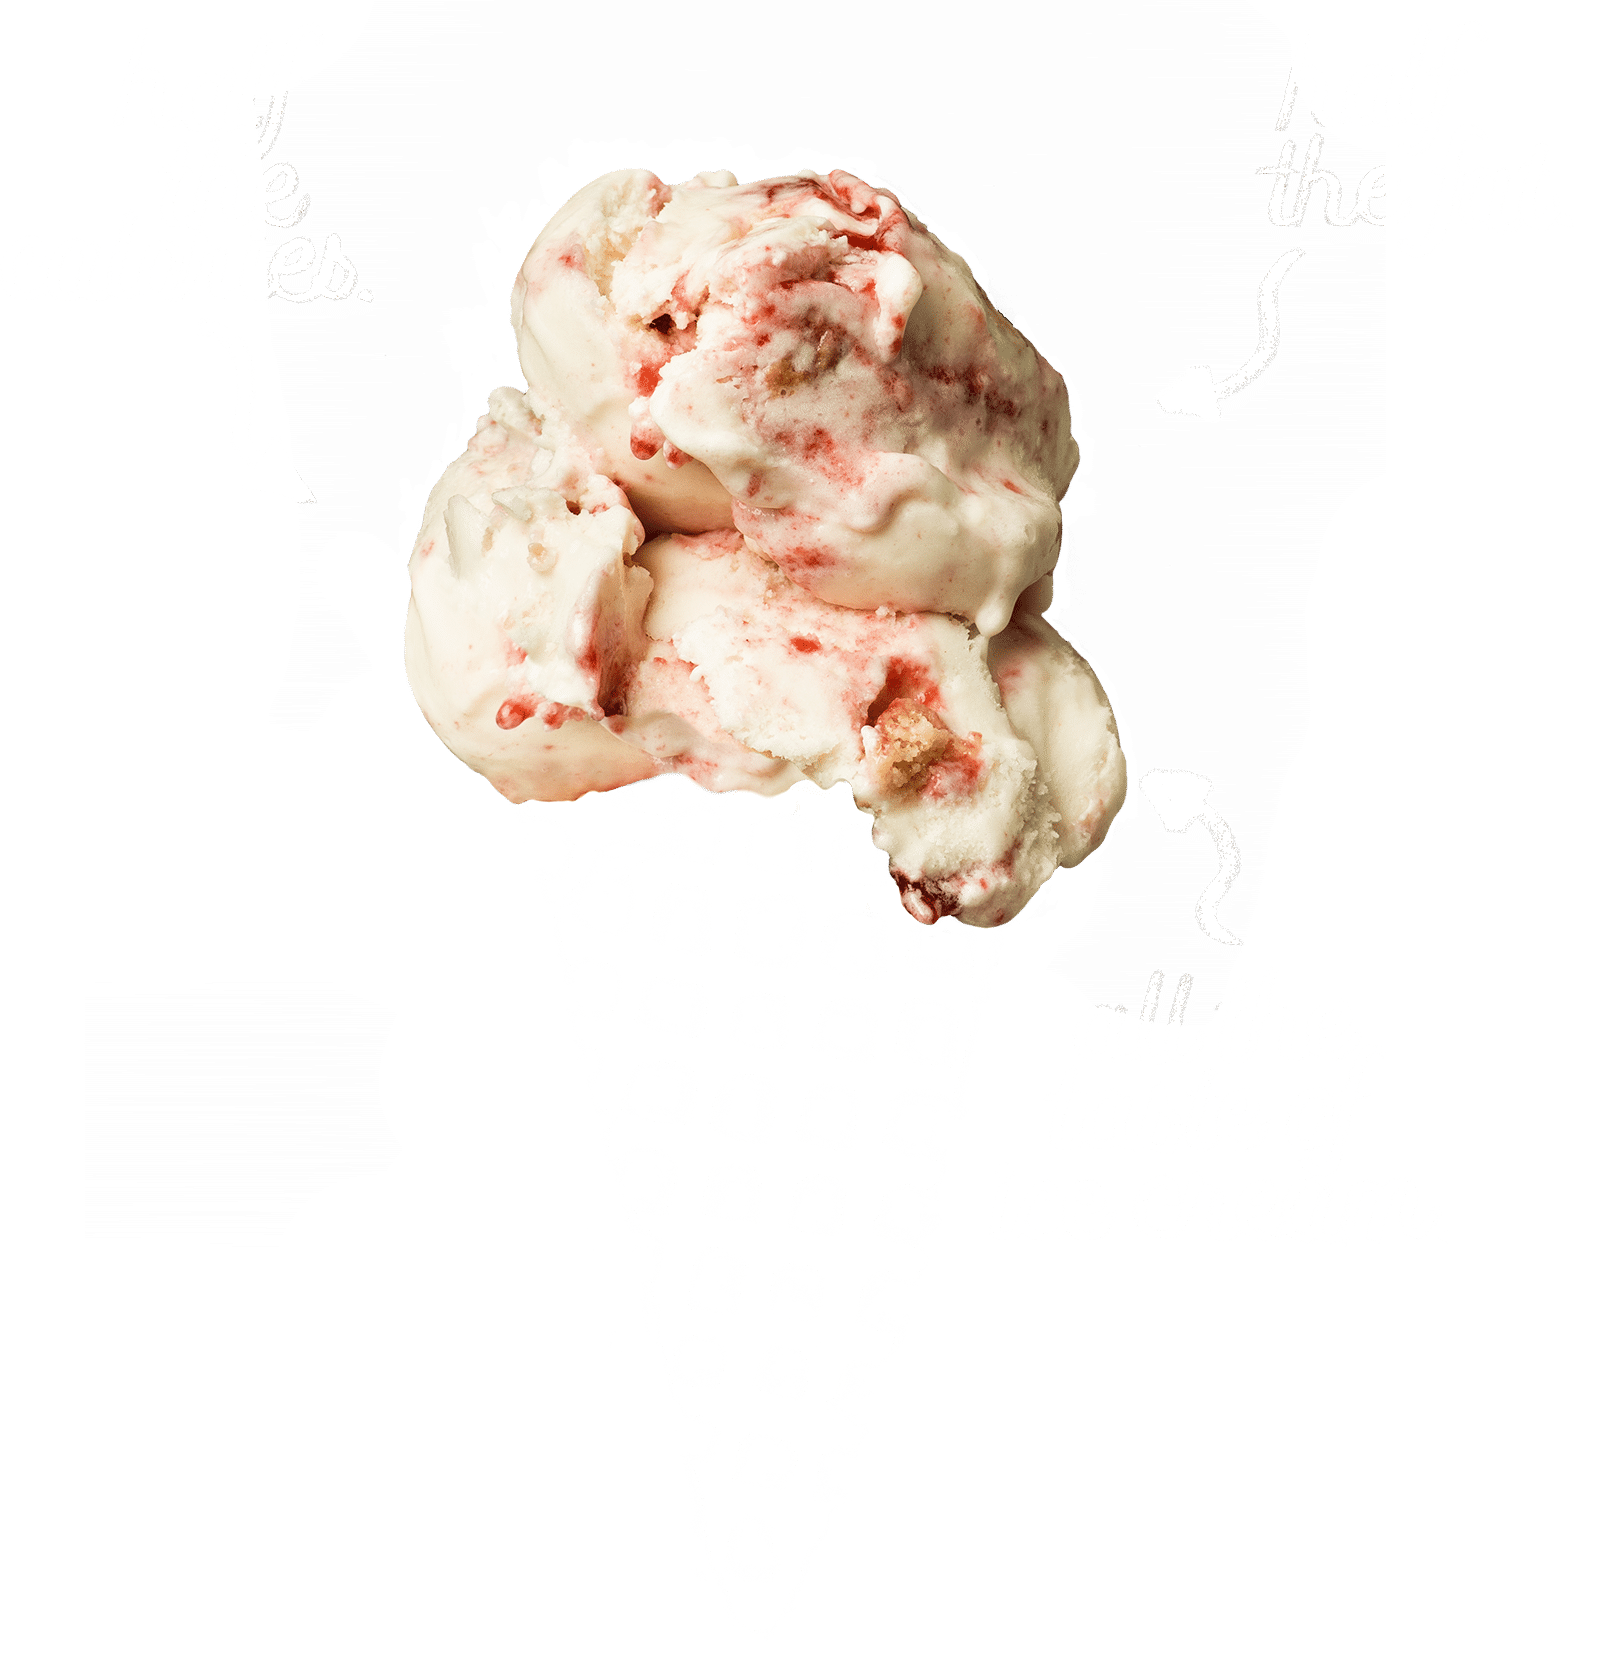 ice cream cone with caption: half the calories, half the fat, all the taste of ice cream